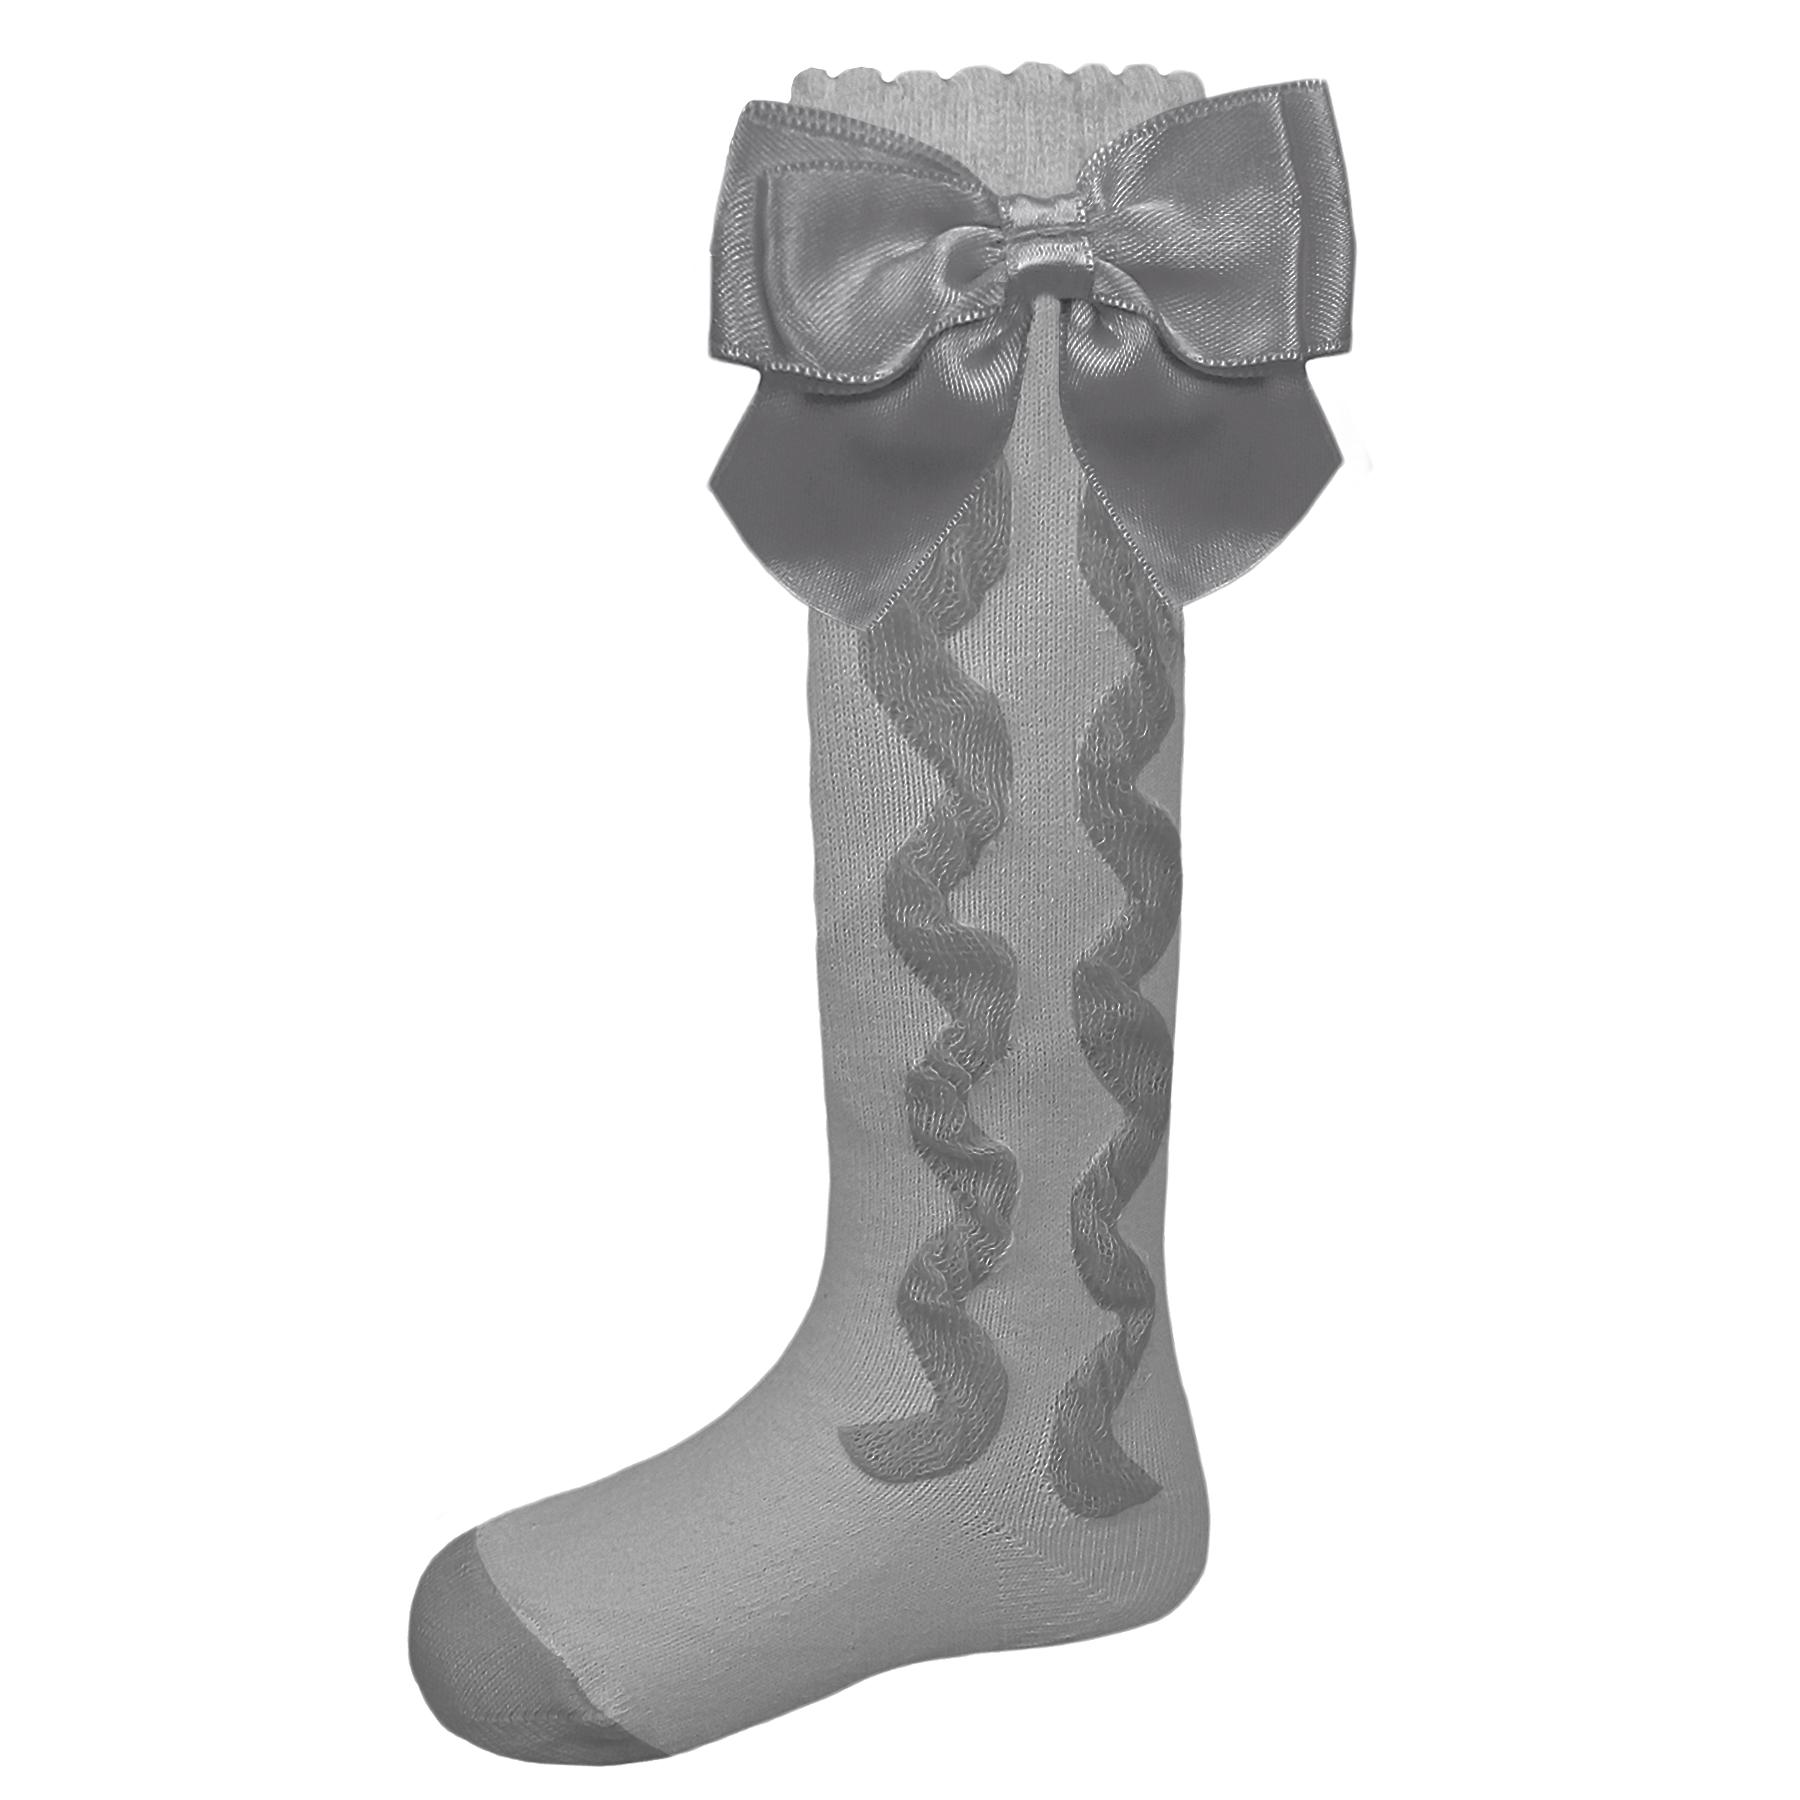 Pex Kids Grazia Knee High Side Bow Ruffle Socks in Grey